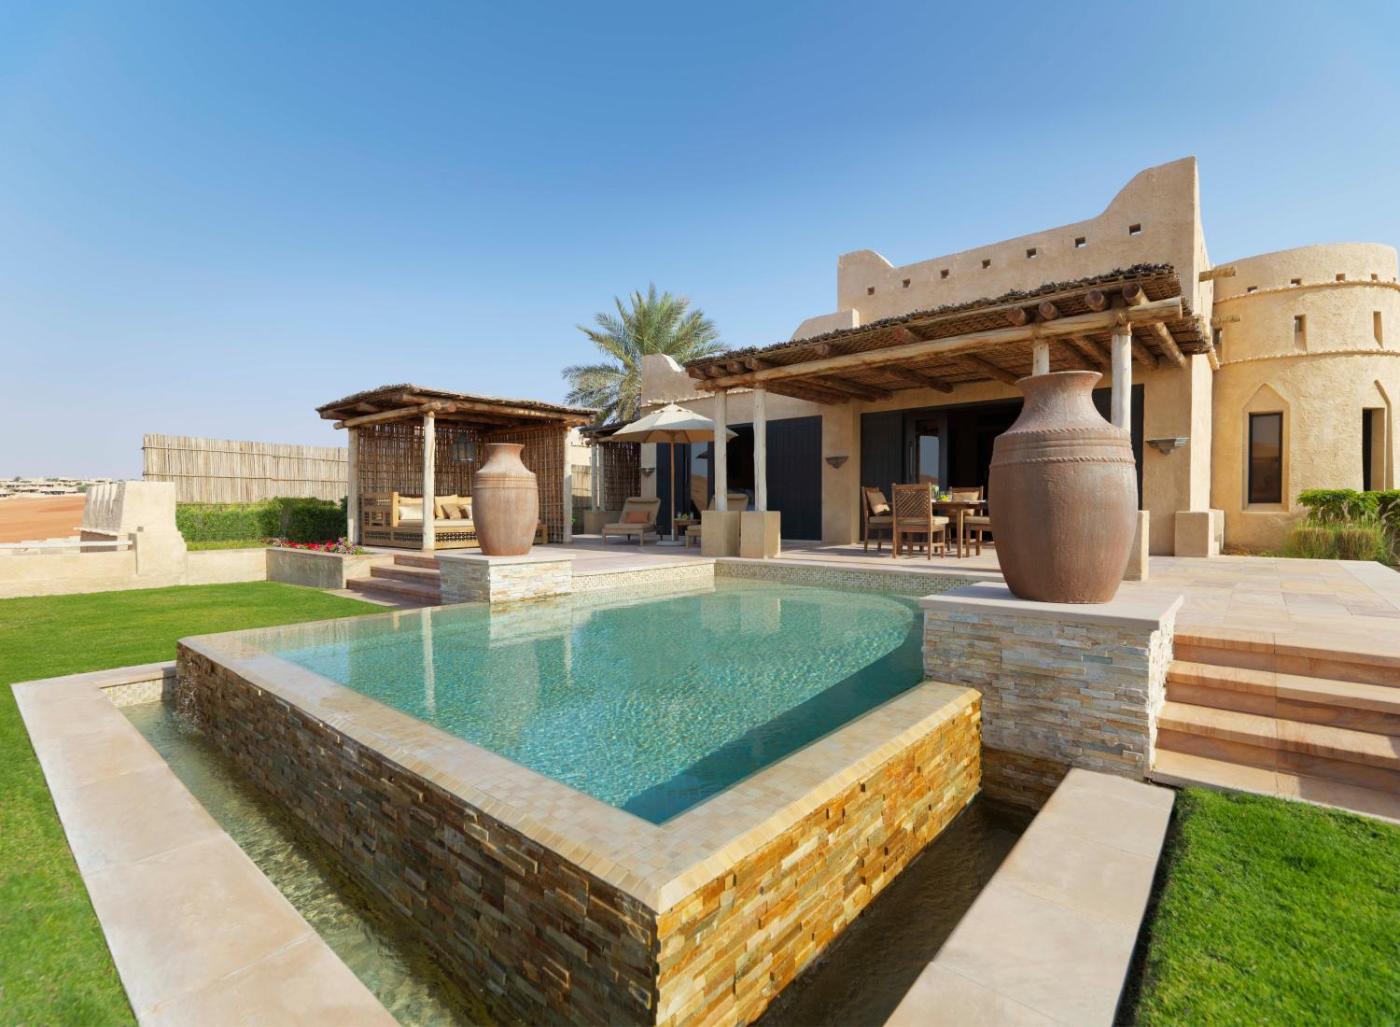 Hotel with private pool - Anantara Qasr al Sarab Desert Resort